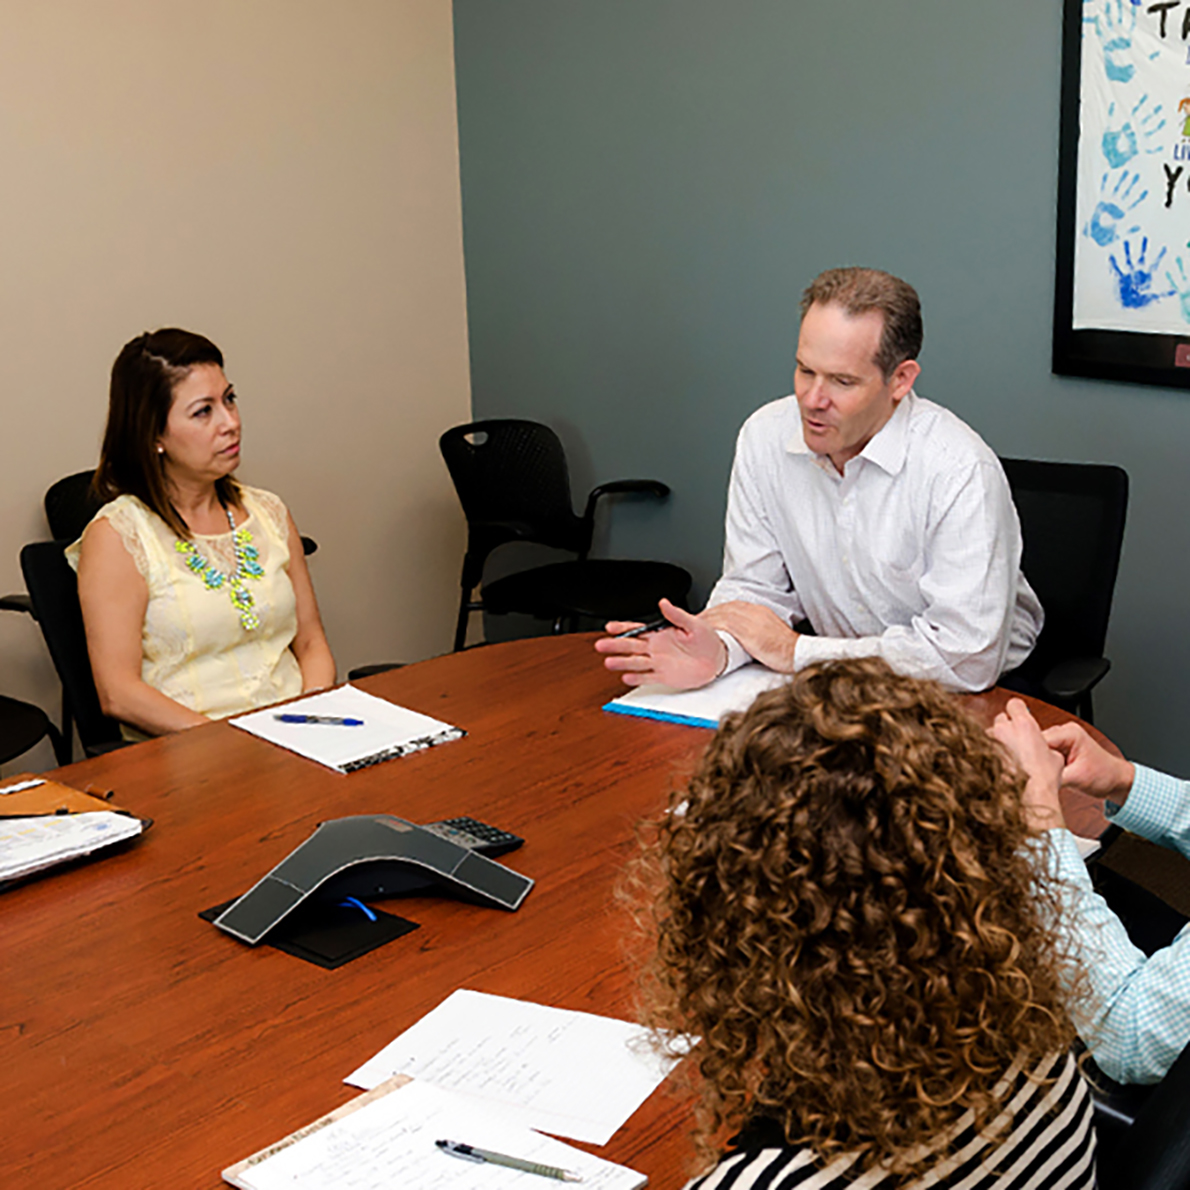 Image of NuStar employees meeting with NuStar’s CEO Brad Barron.